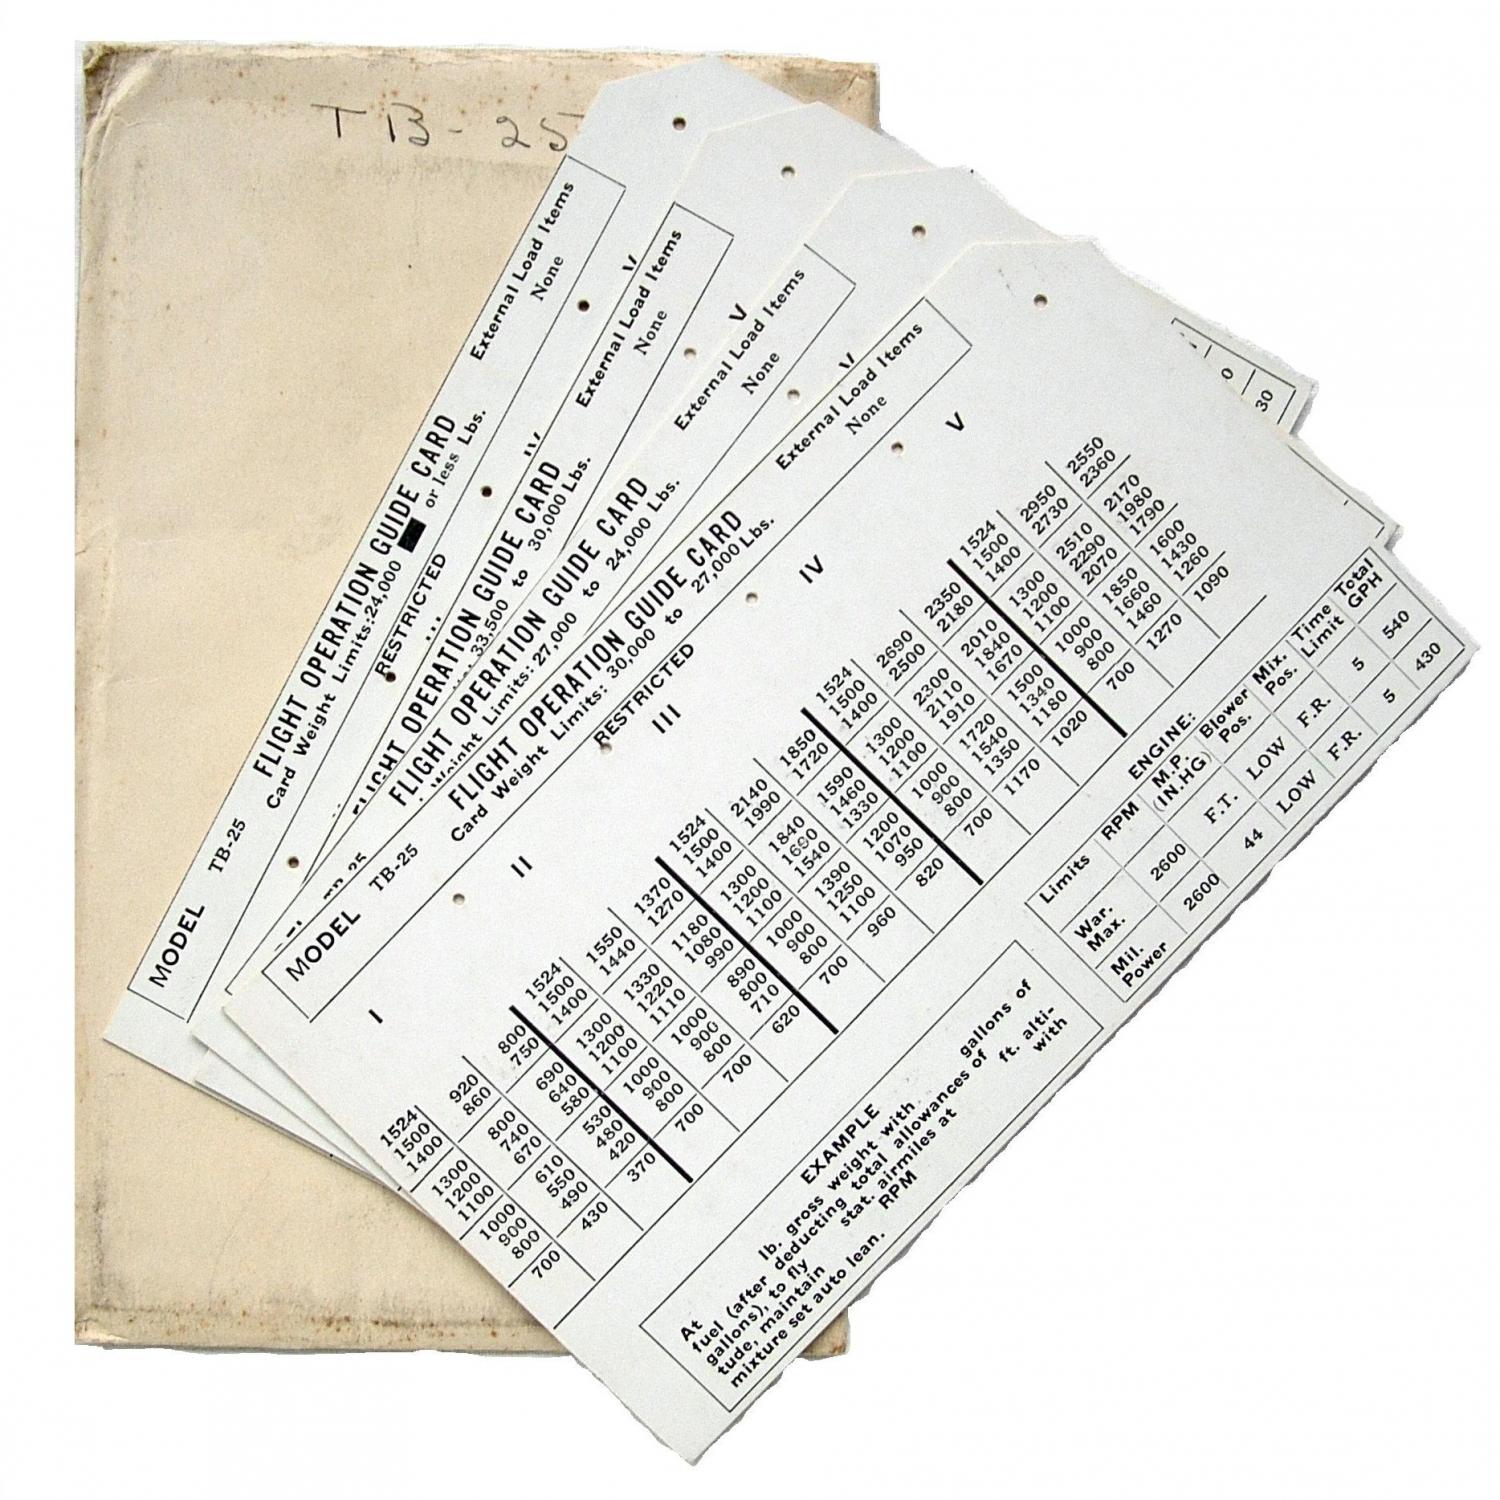 USAAF TB-25 Flight Operation Cards